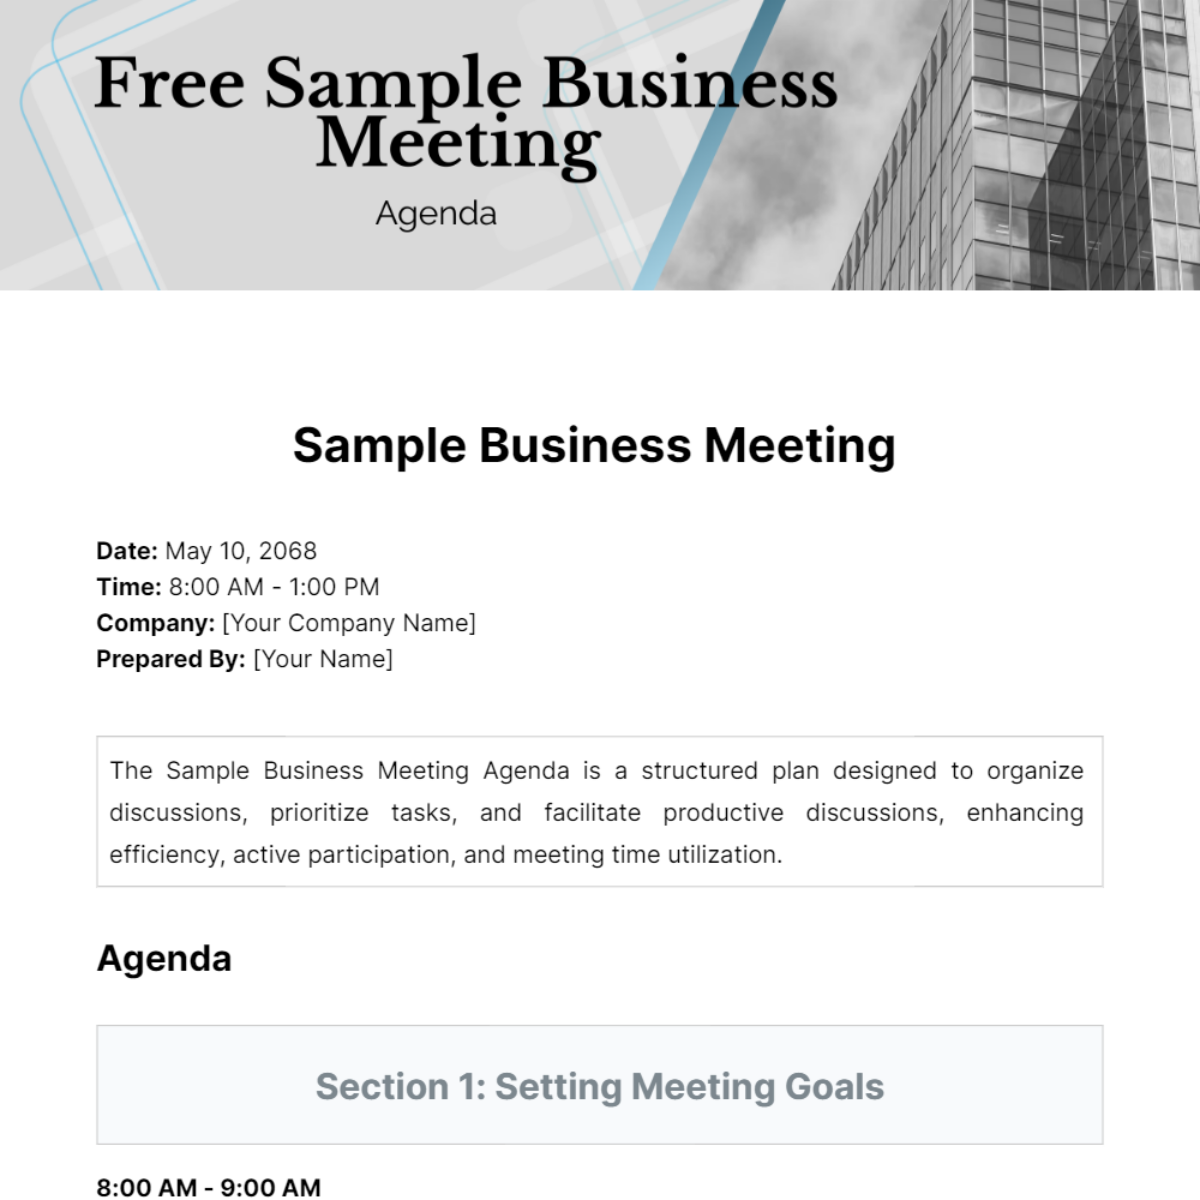 Free Sample Business Meeting Agenda  Template